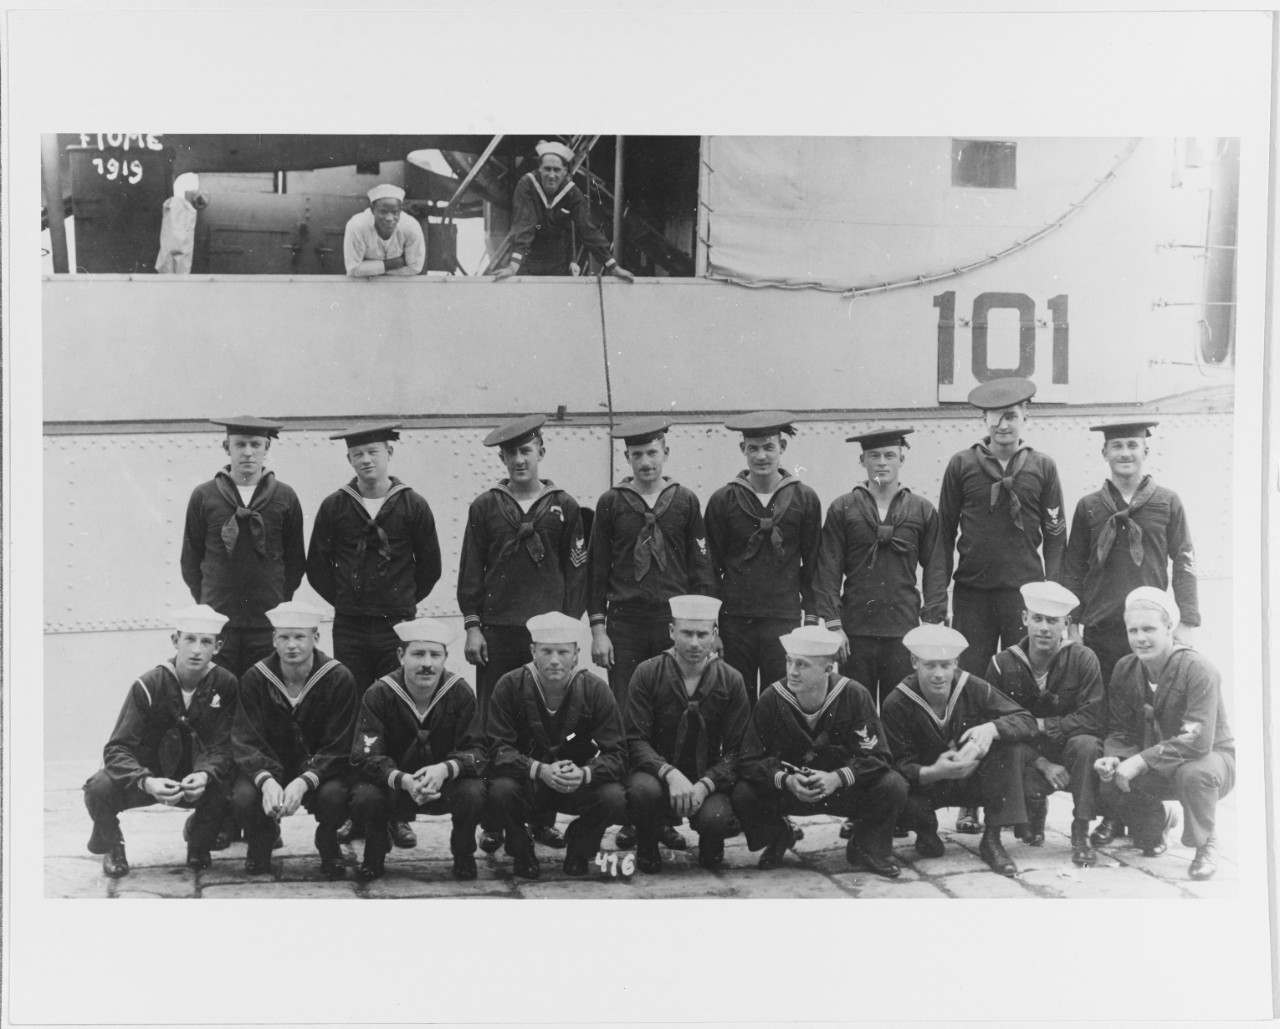 USS LANSDALE (DD-101)